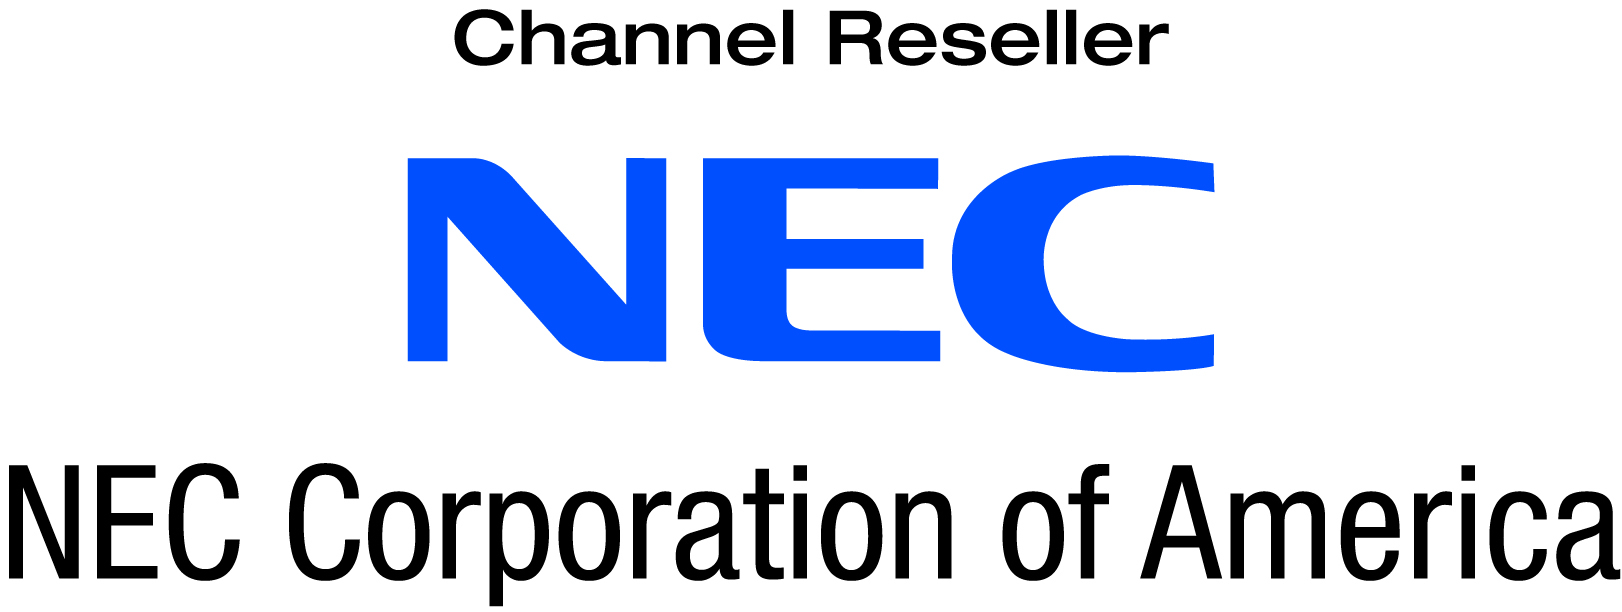 NEC Channel reseller 